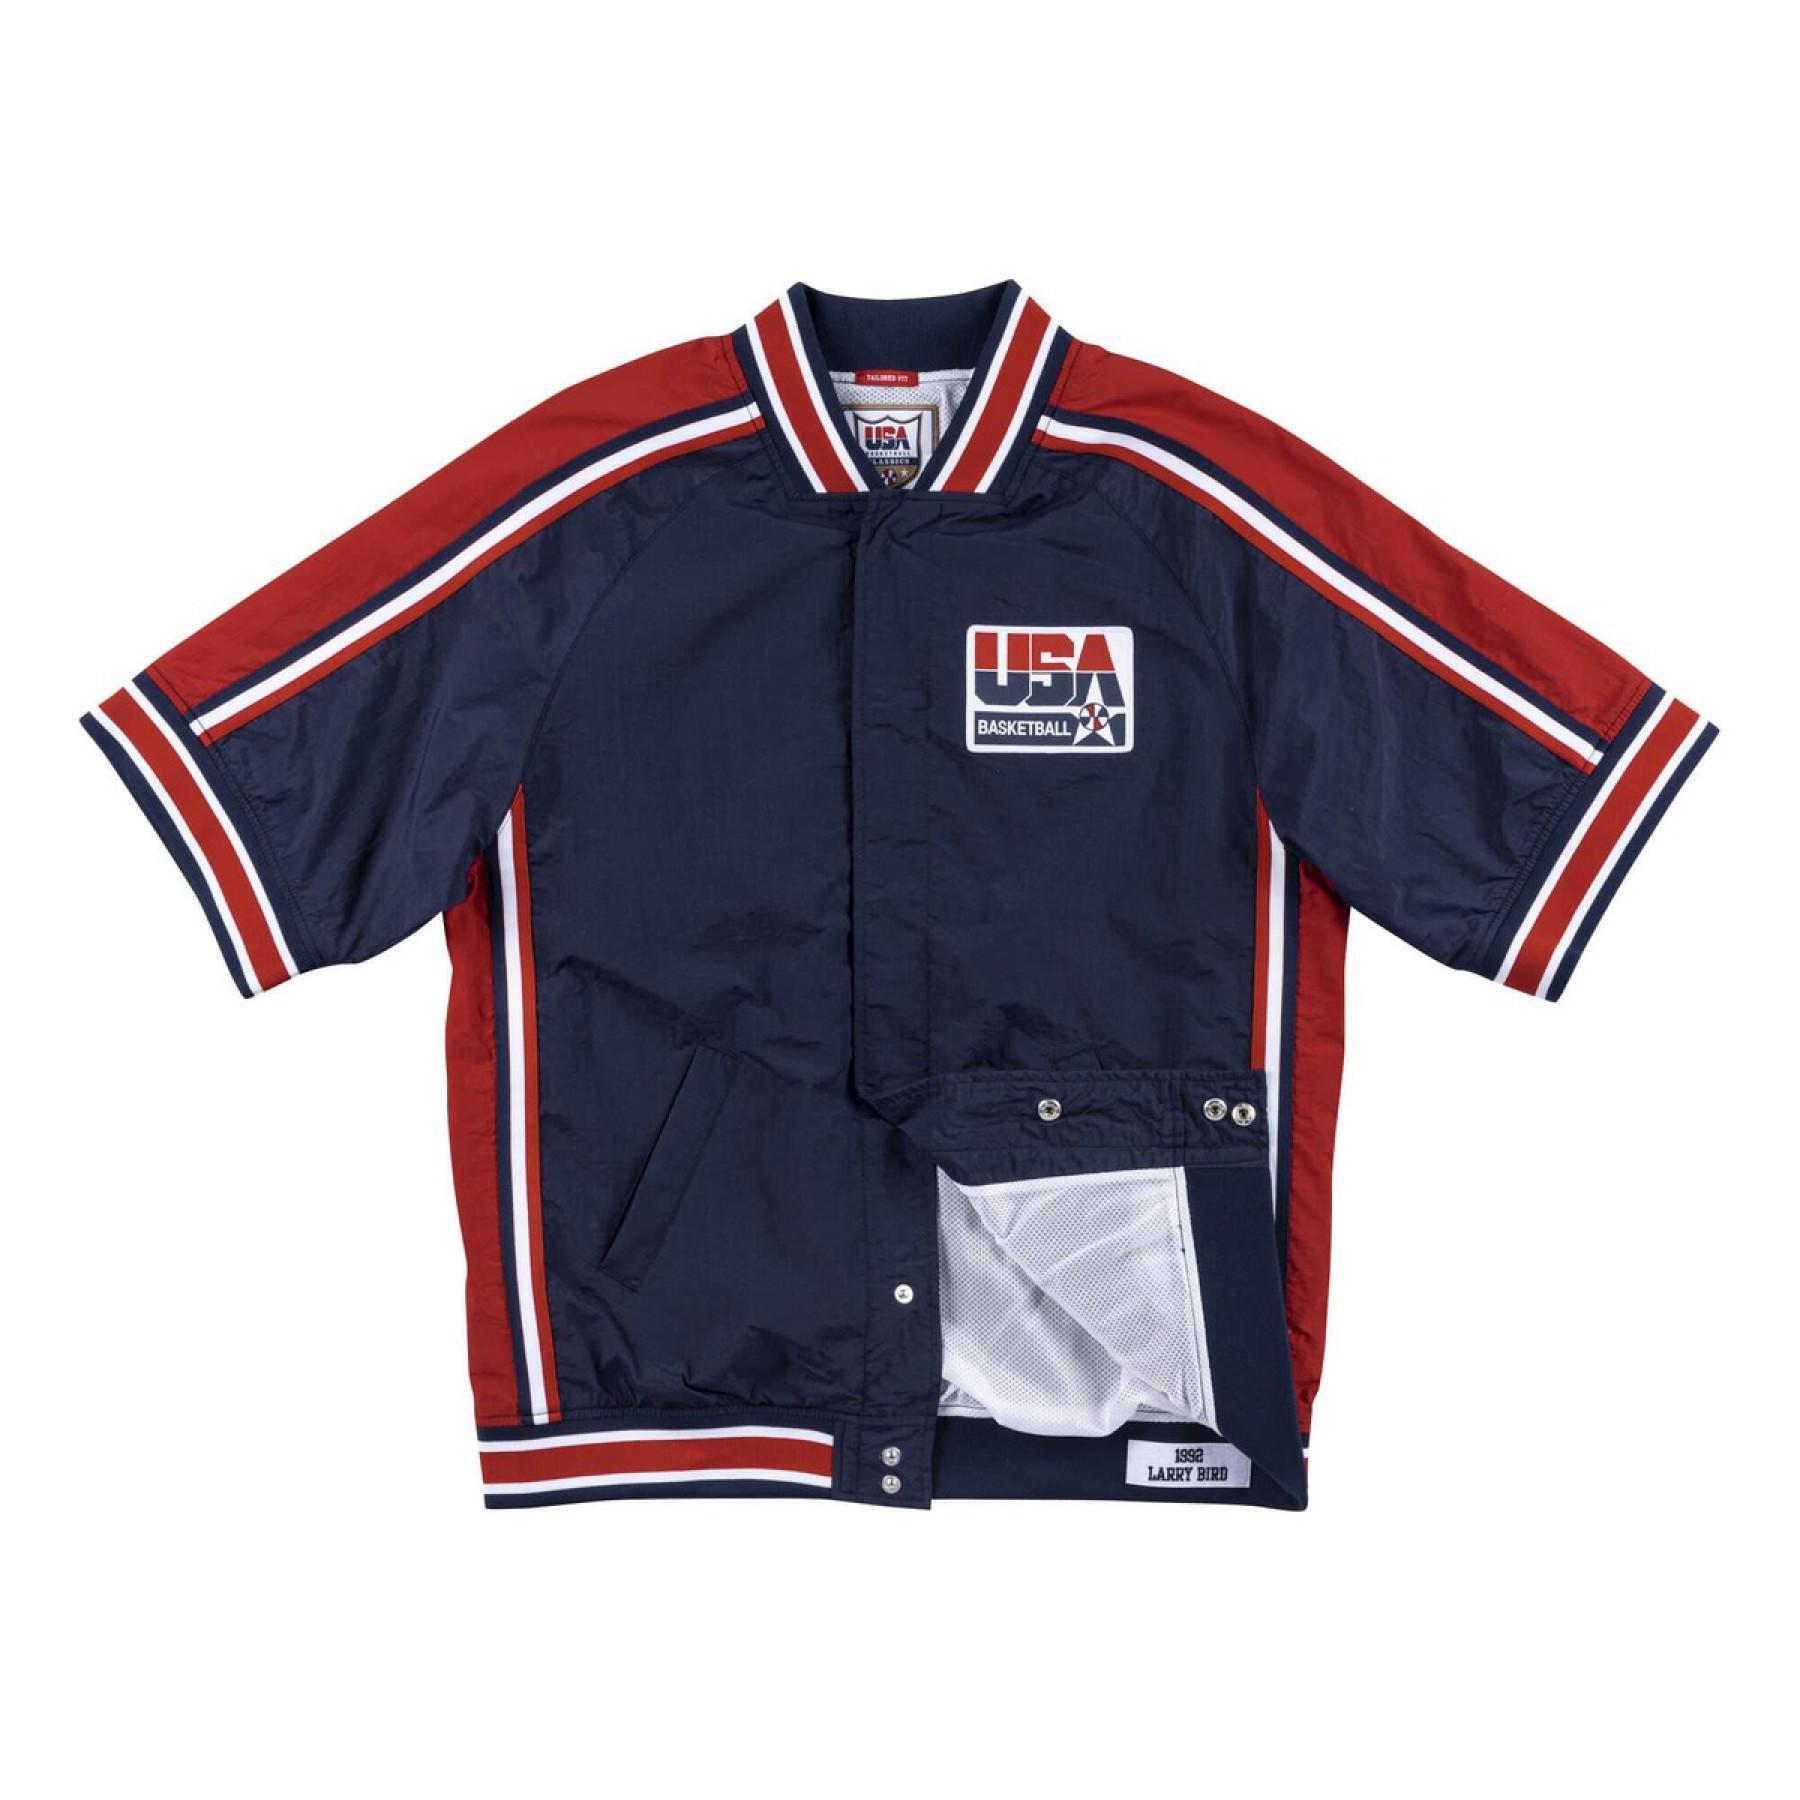 Team jacket USA authentic Larry Bird